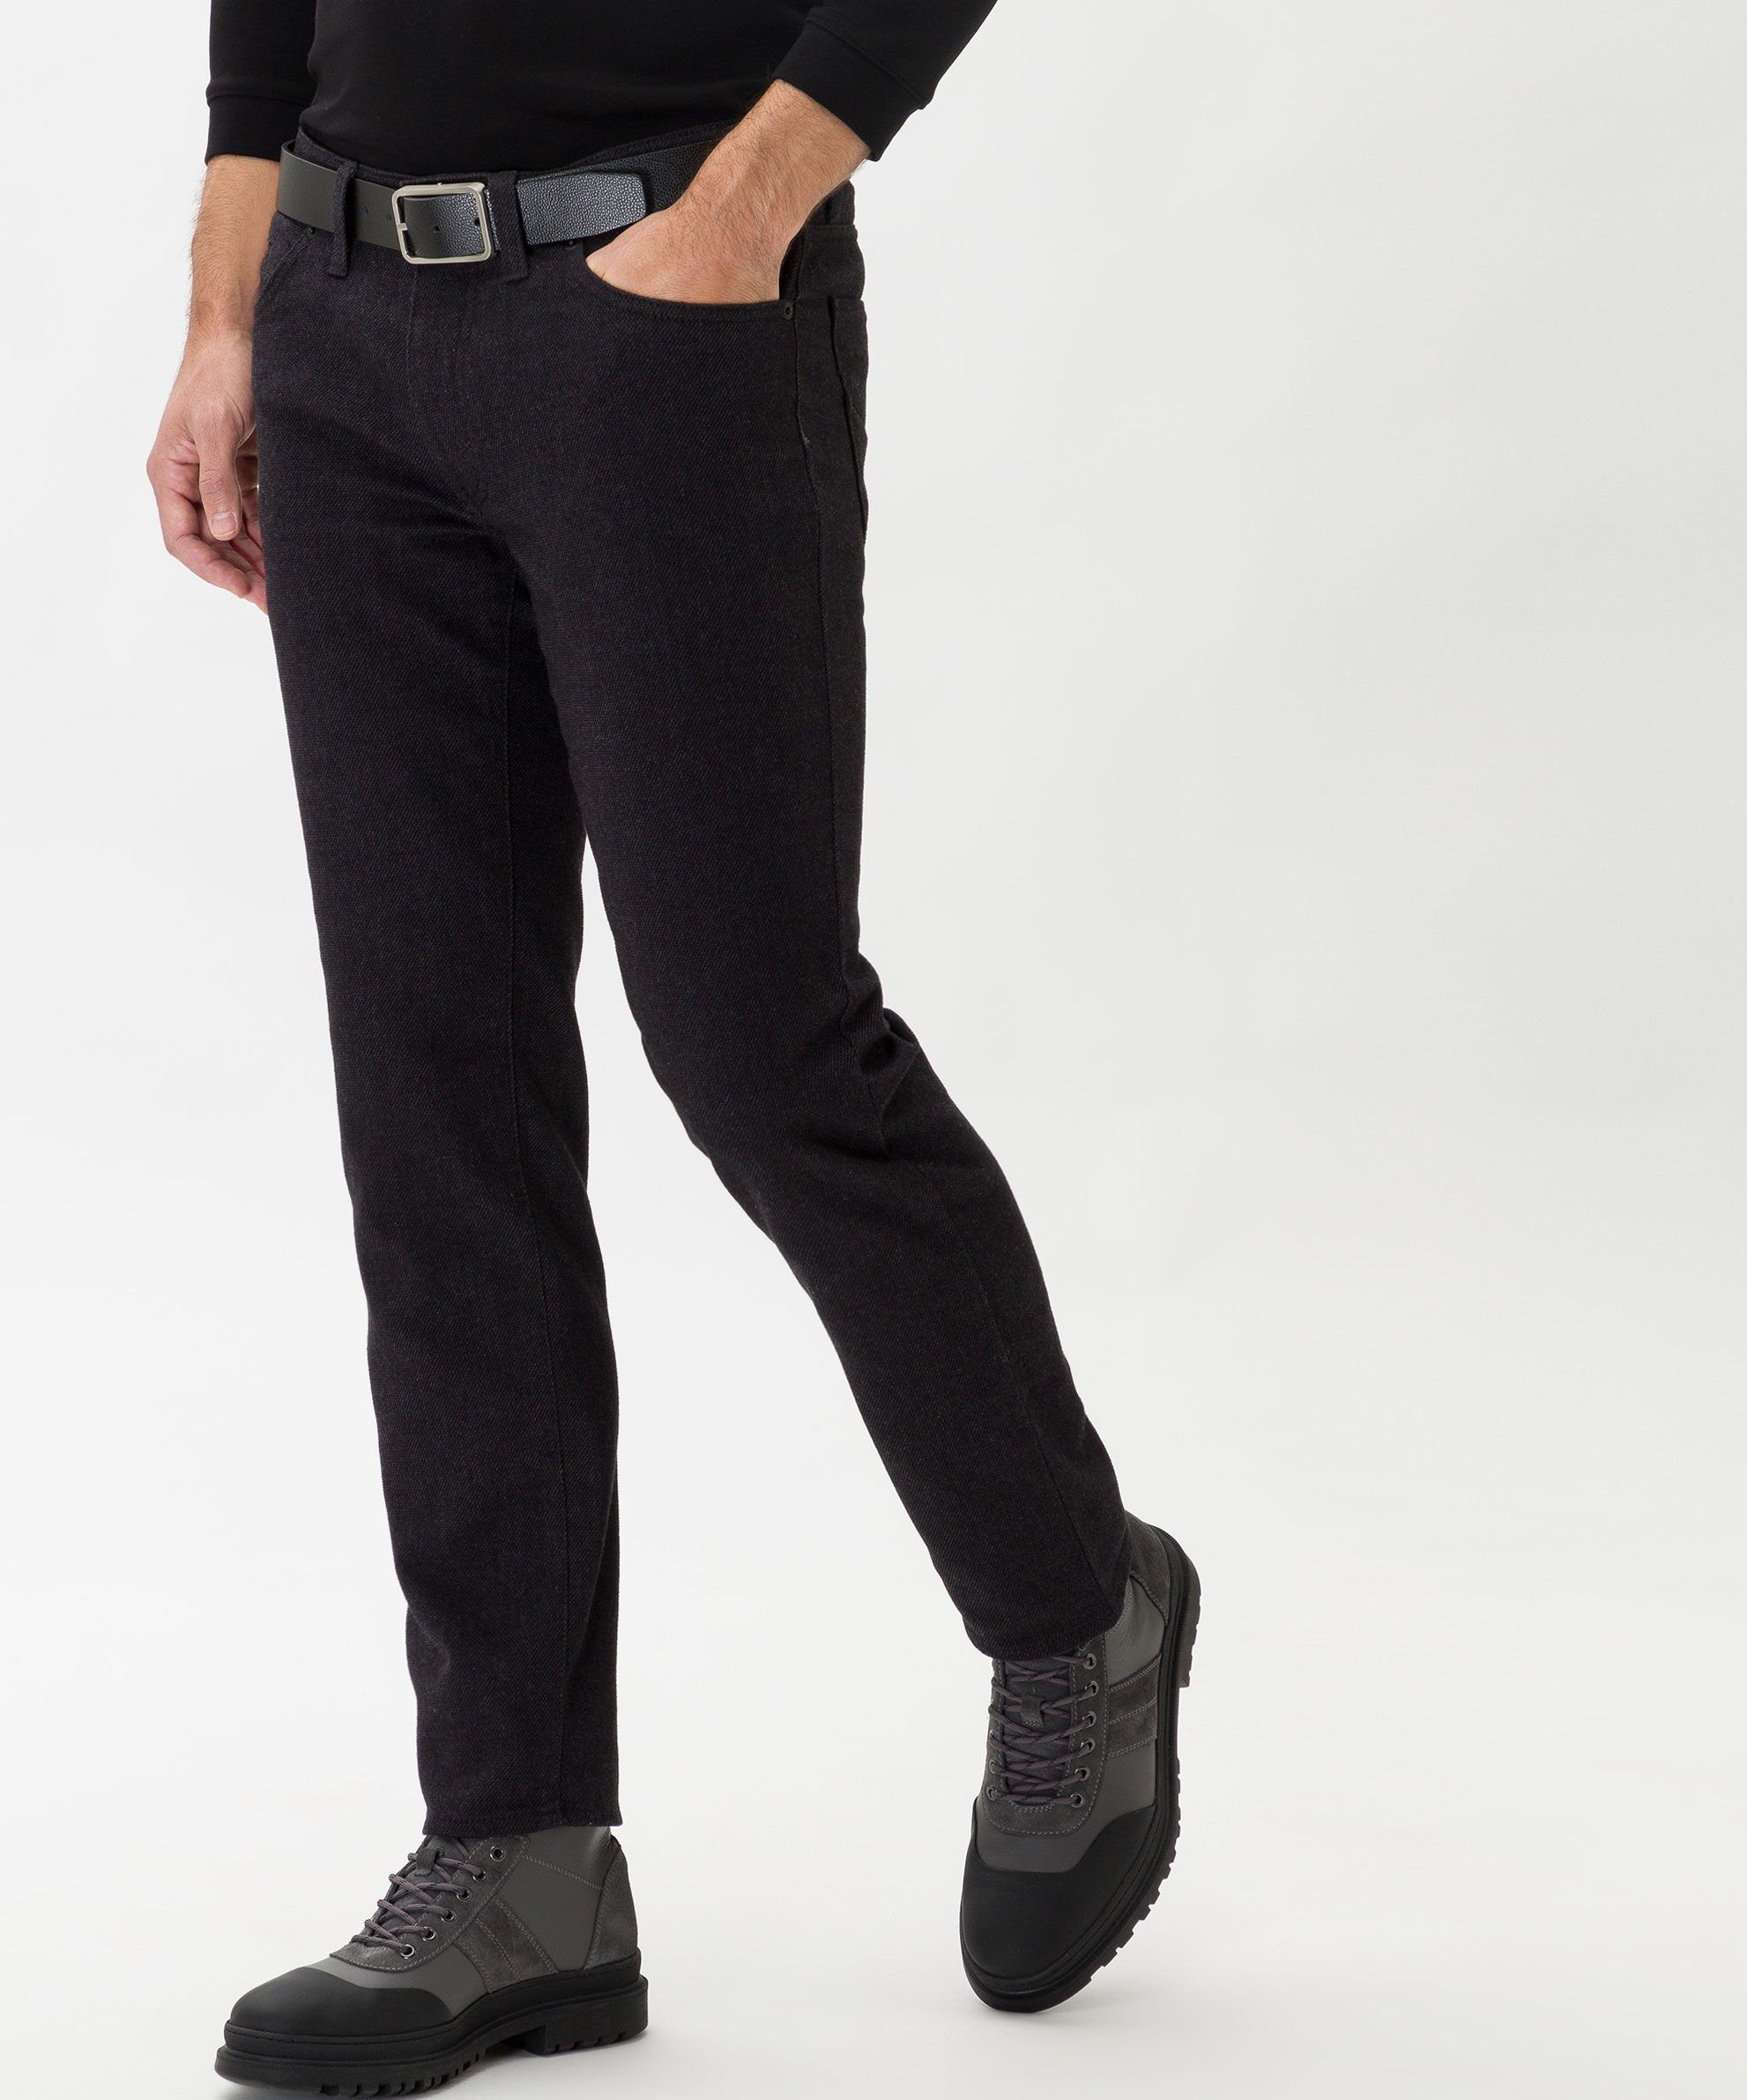 C STYLE.CADIZ 5-Pocket-Jeans Brax platin